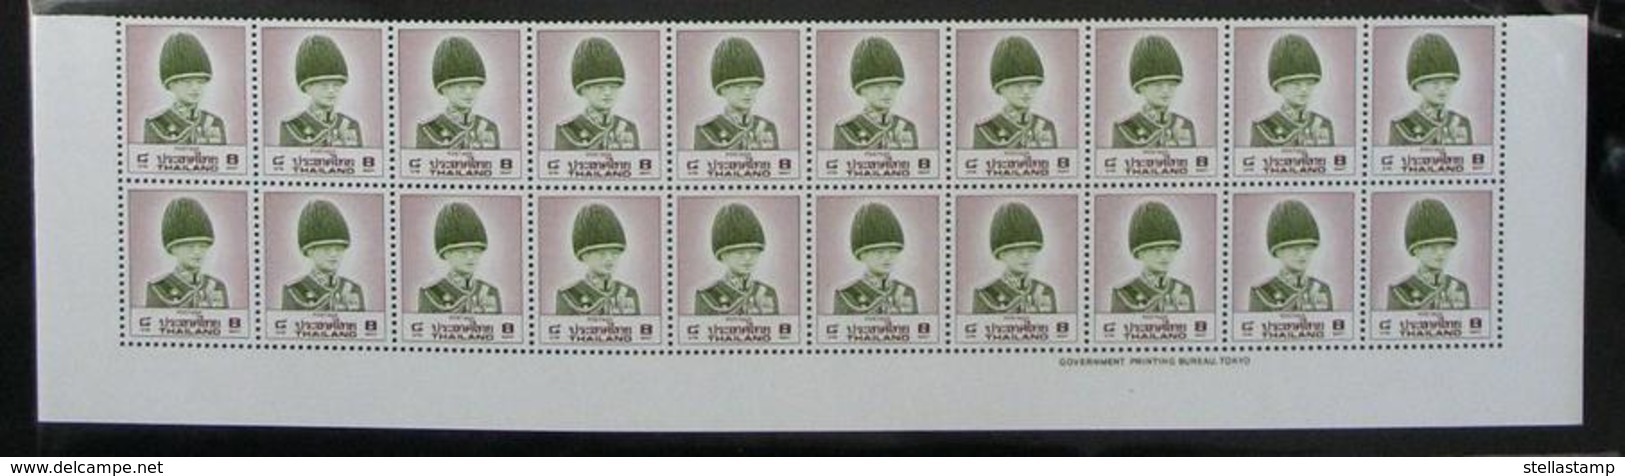 Thailand Stamp Definitive King Rama 9 8th Series 8 Baht B20 Tokyo (Original Plate) #1 - Tailandia